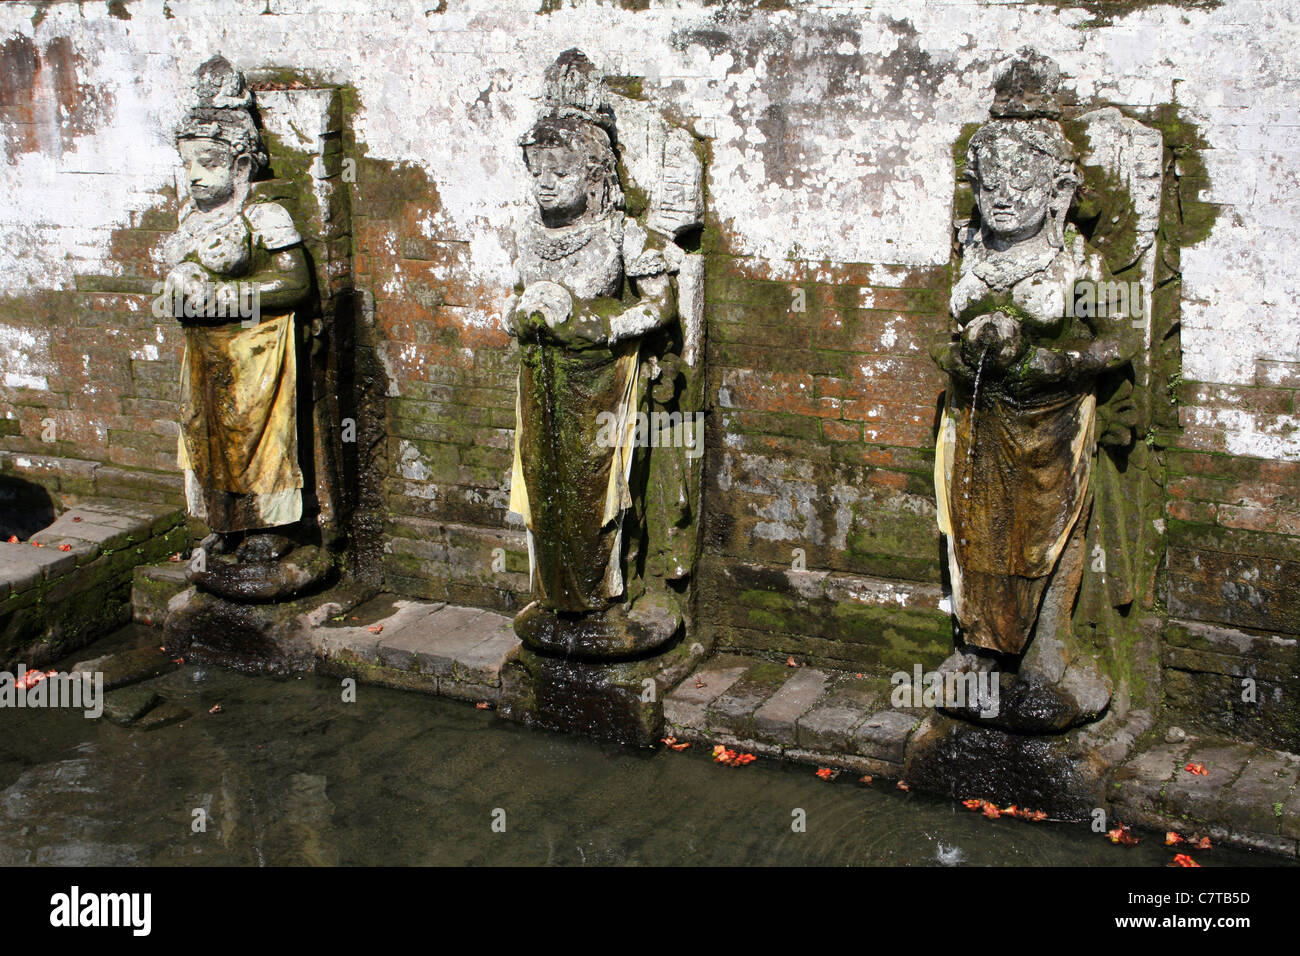 Bathing Temple Figures at Goa Gajah, Bali Stock Photo